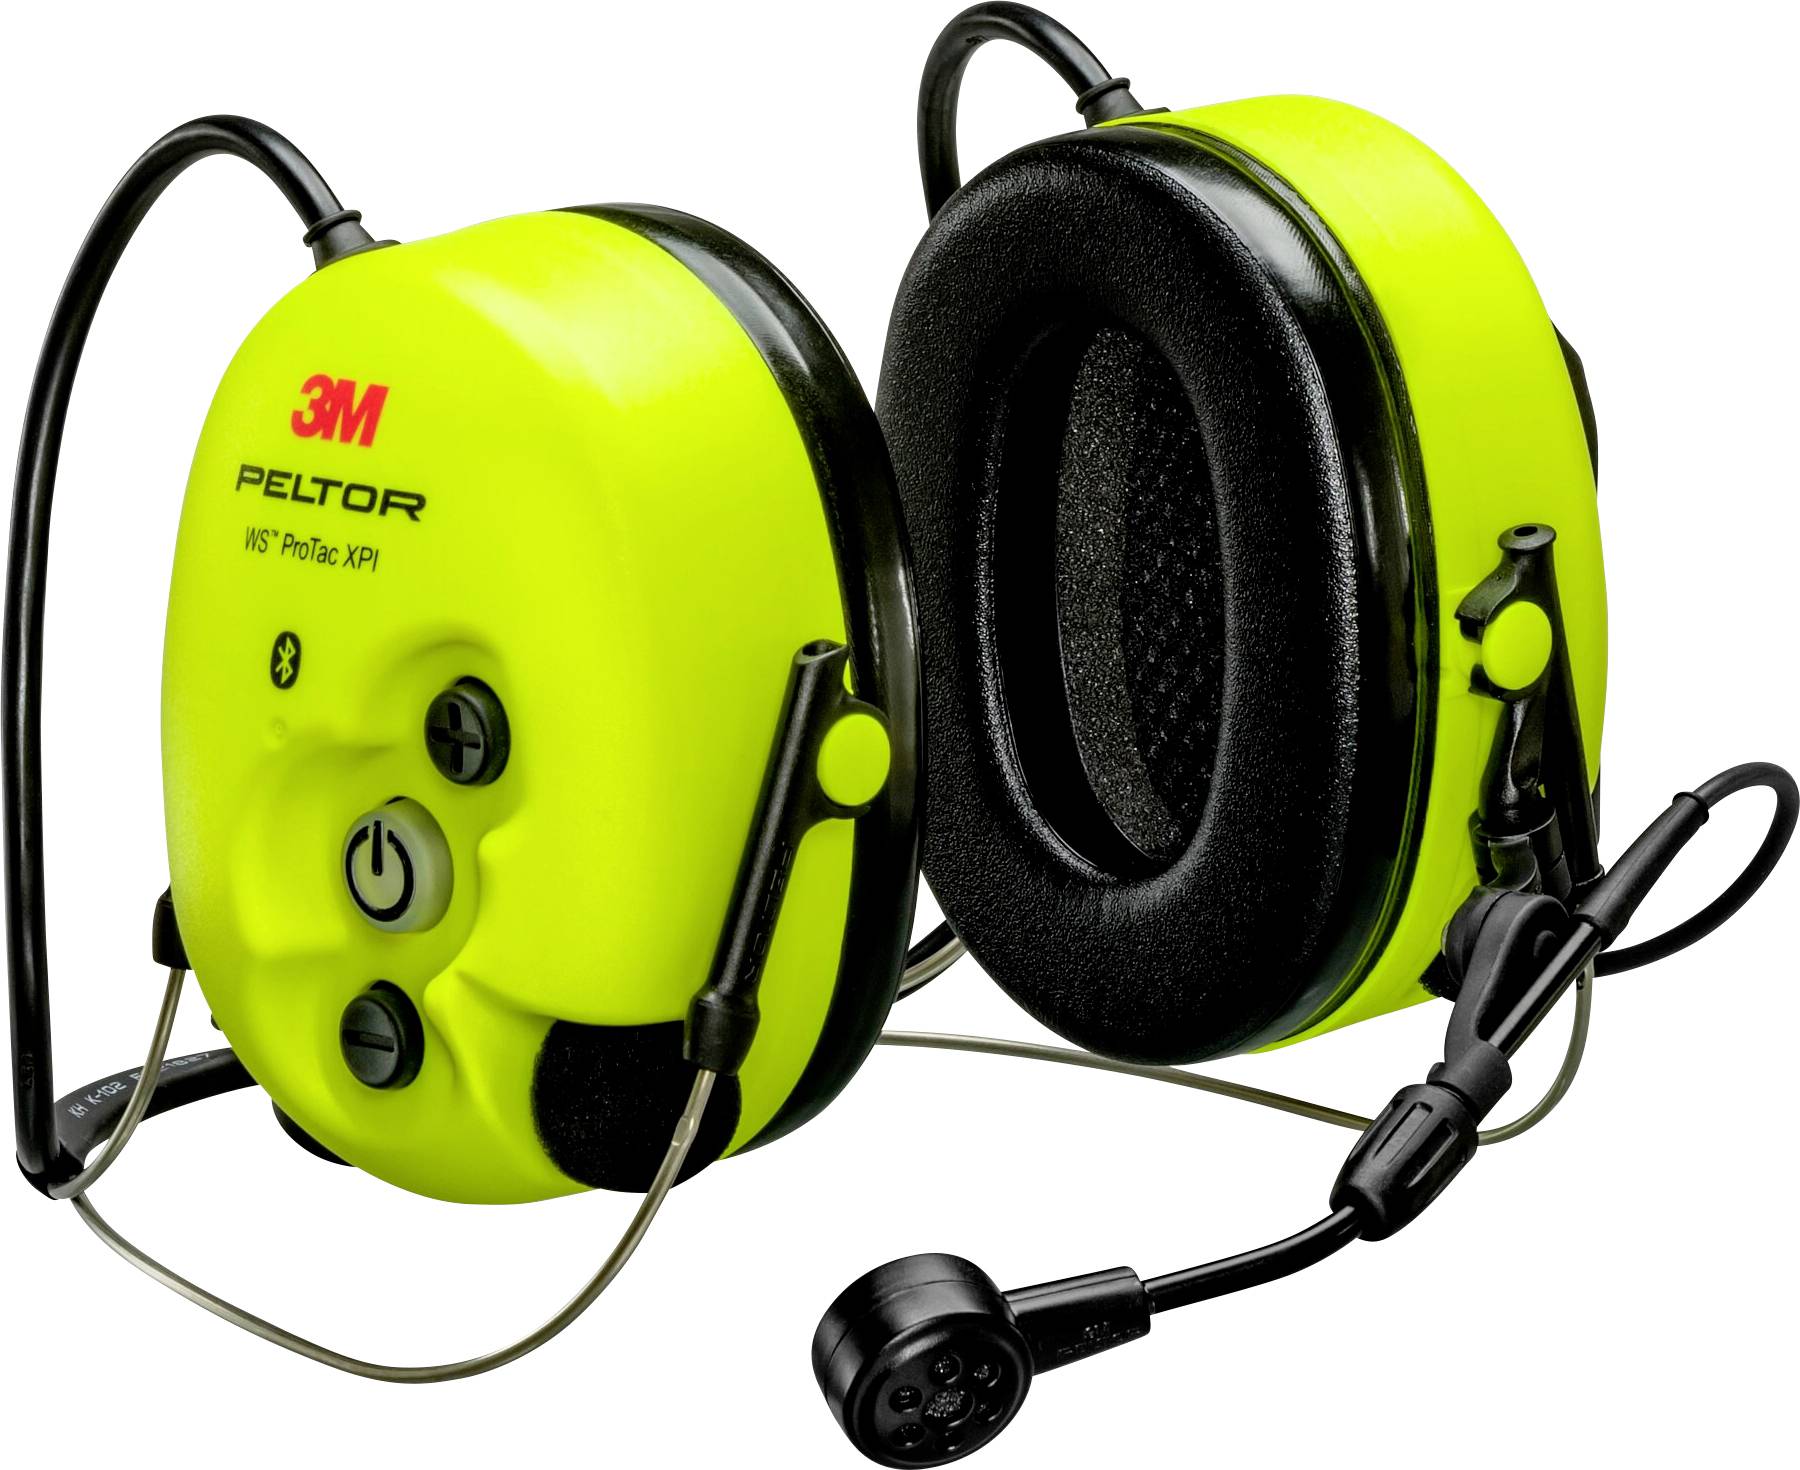 3M™ PELTOR™ WS™ ProTac XPI Headsets